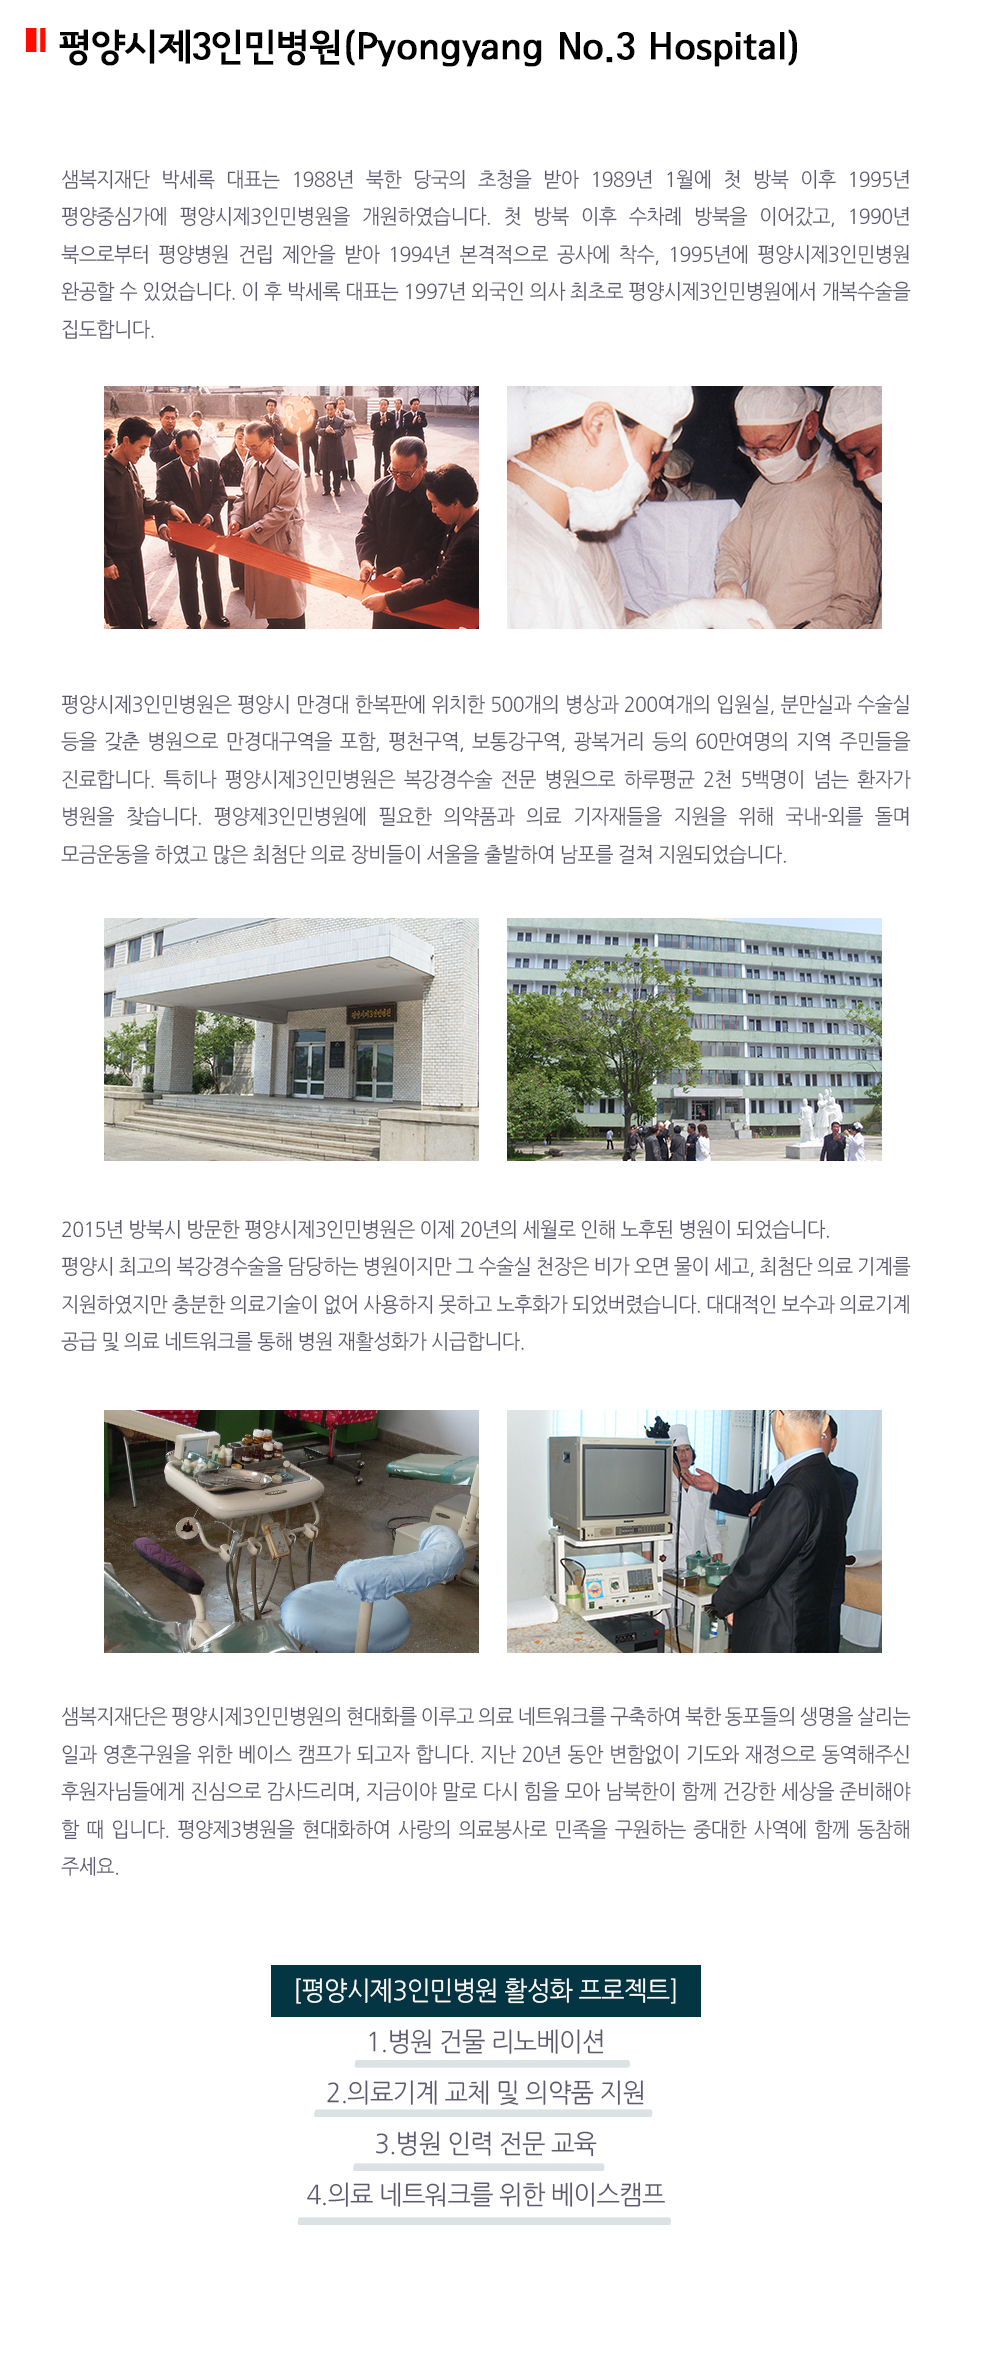 Pyongyang No. 3 Hospital.jpg